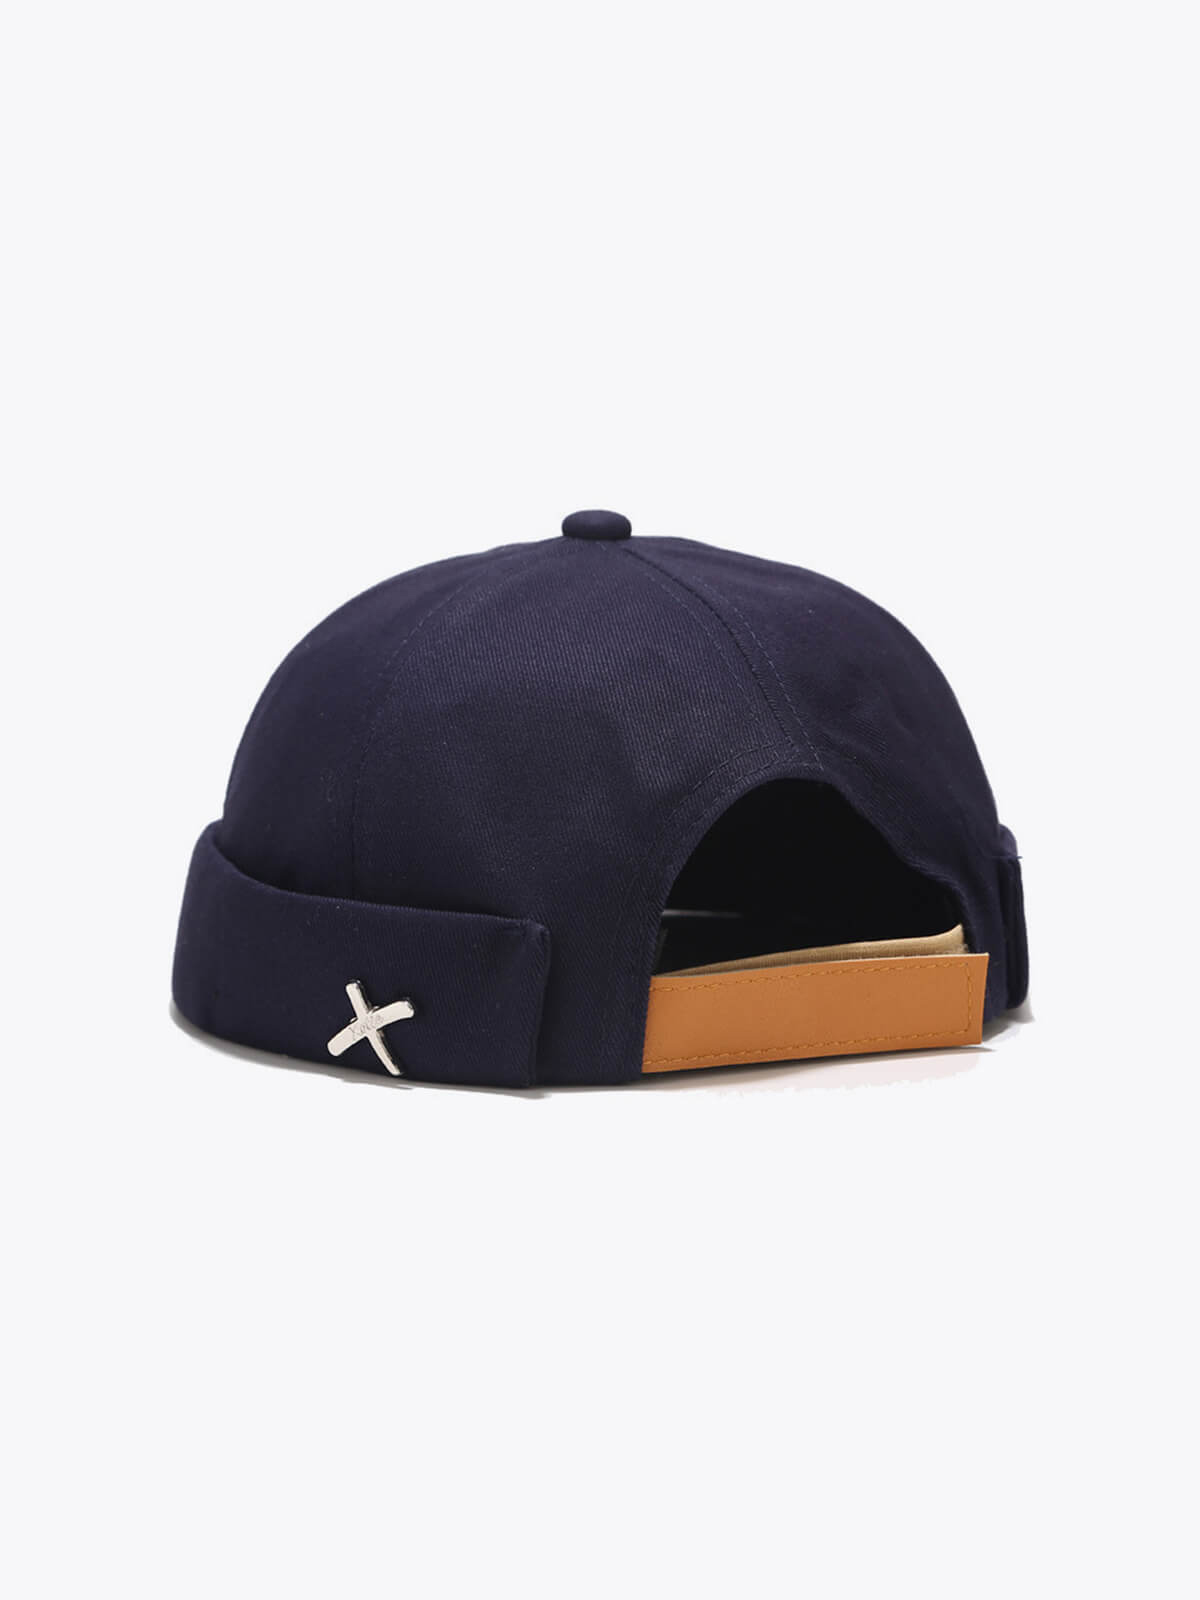 Retro X Navy Docker Hat - Docker Hats